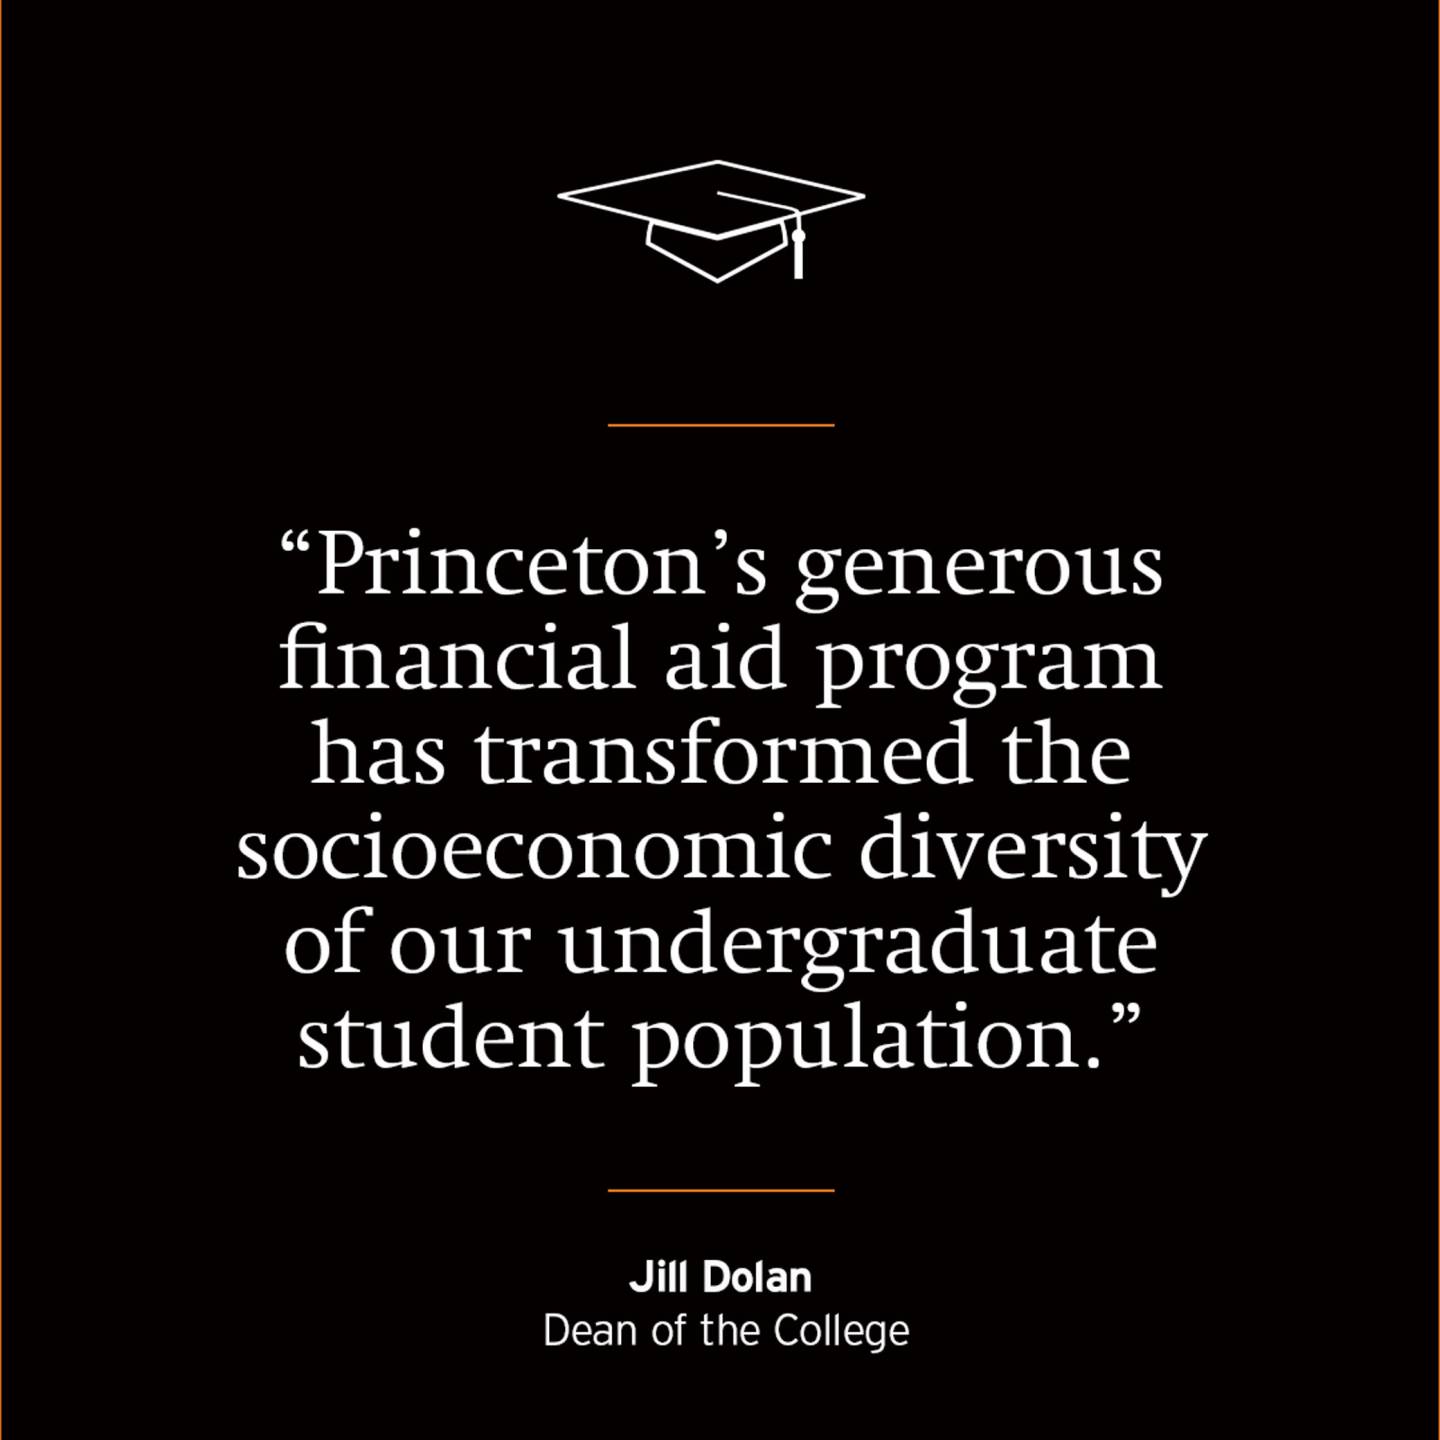 "Princeton's generous financial aid program has transformed the socioeconomic diversity of our undergraduate student population." 